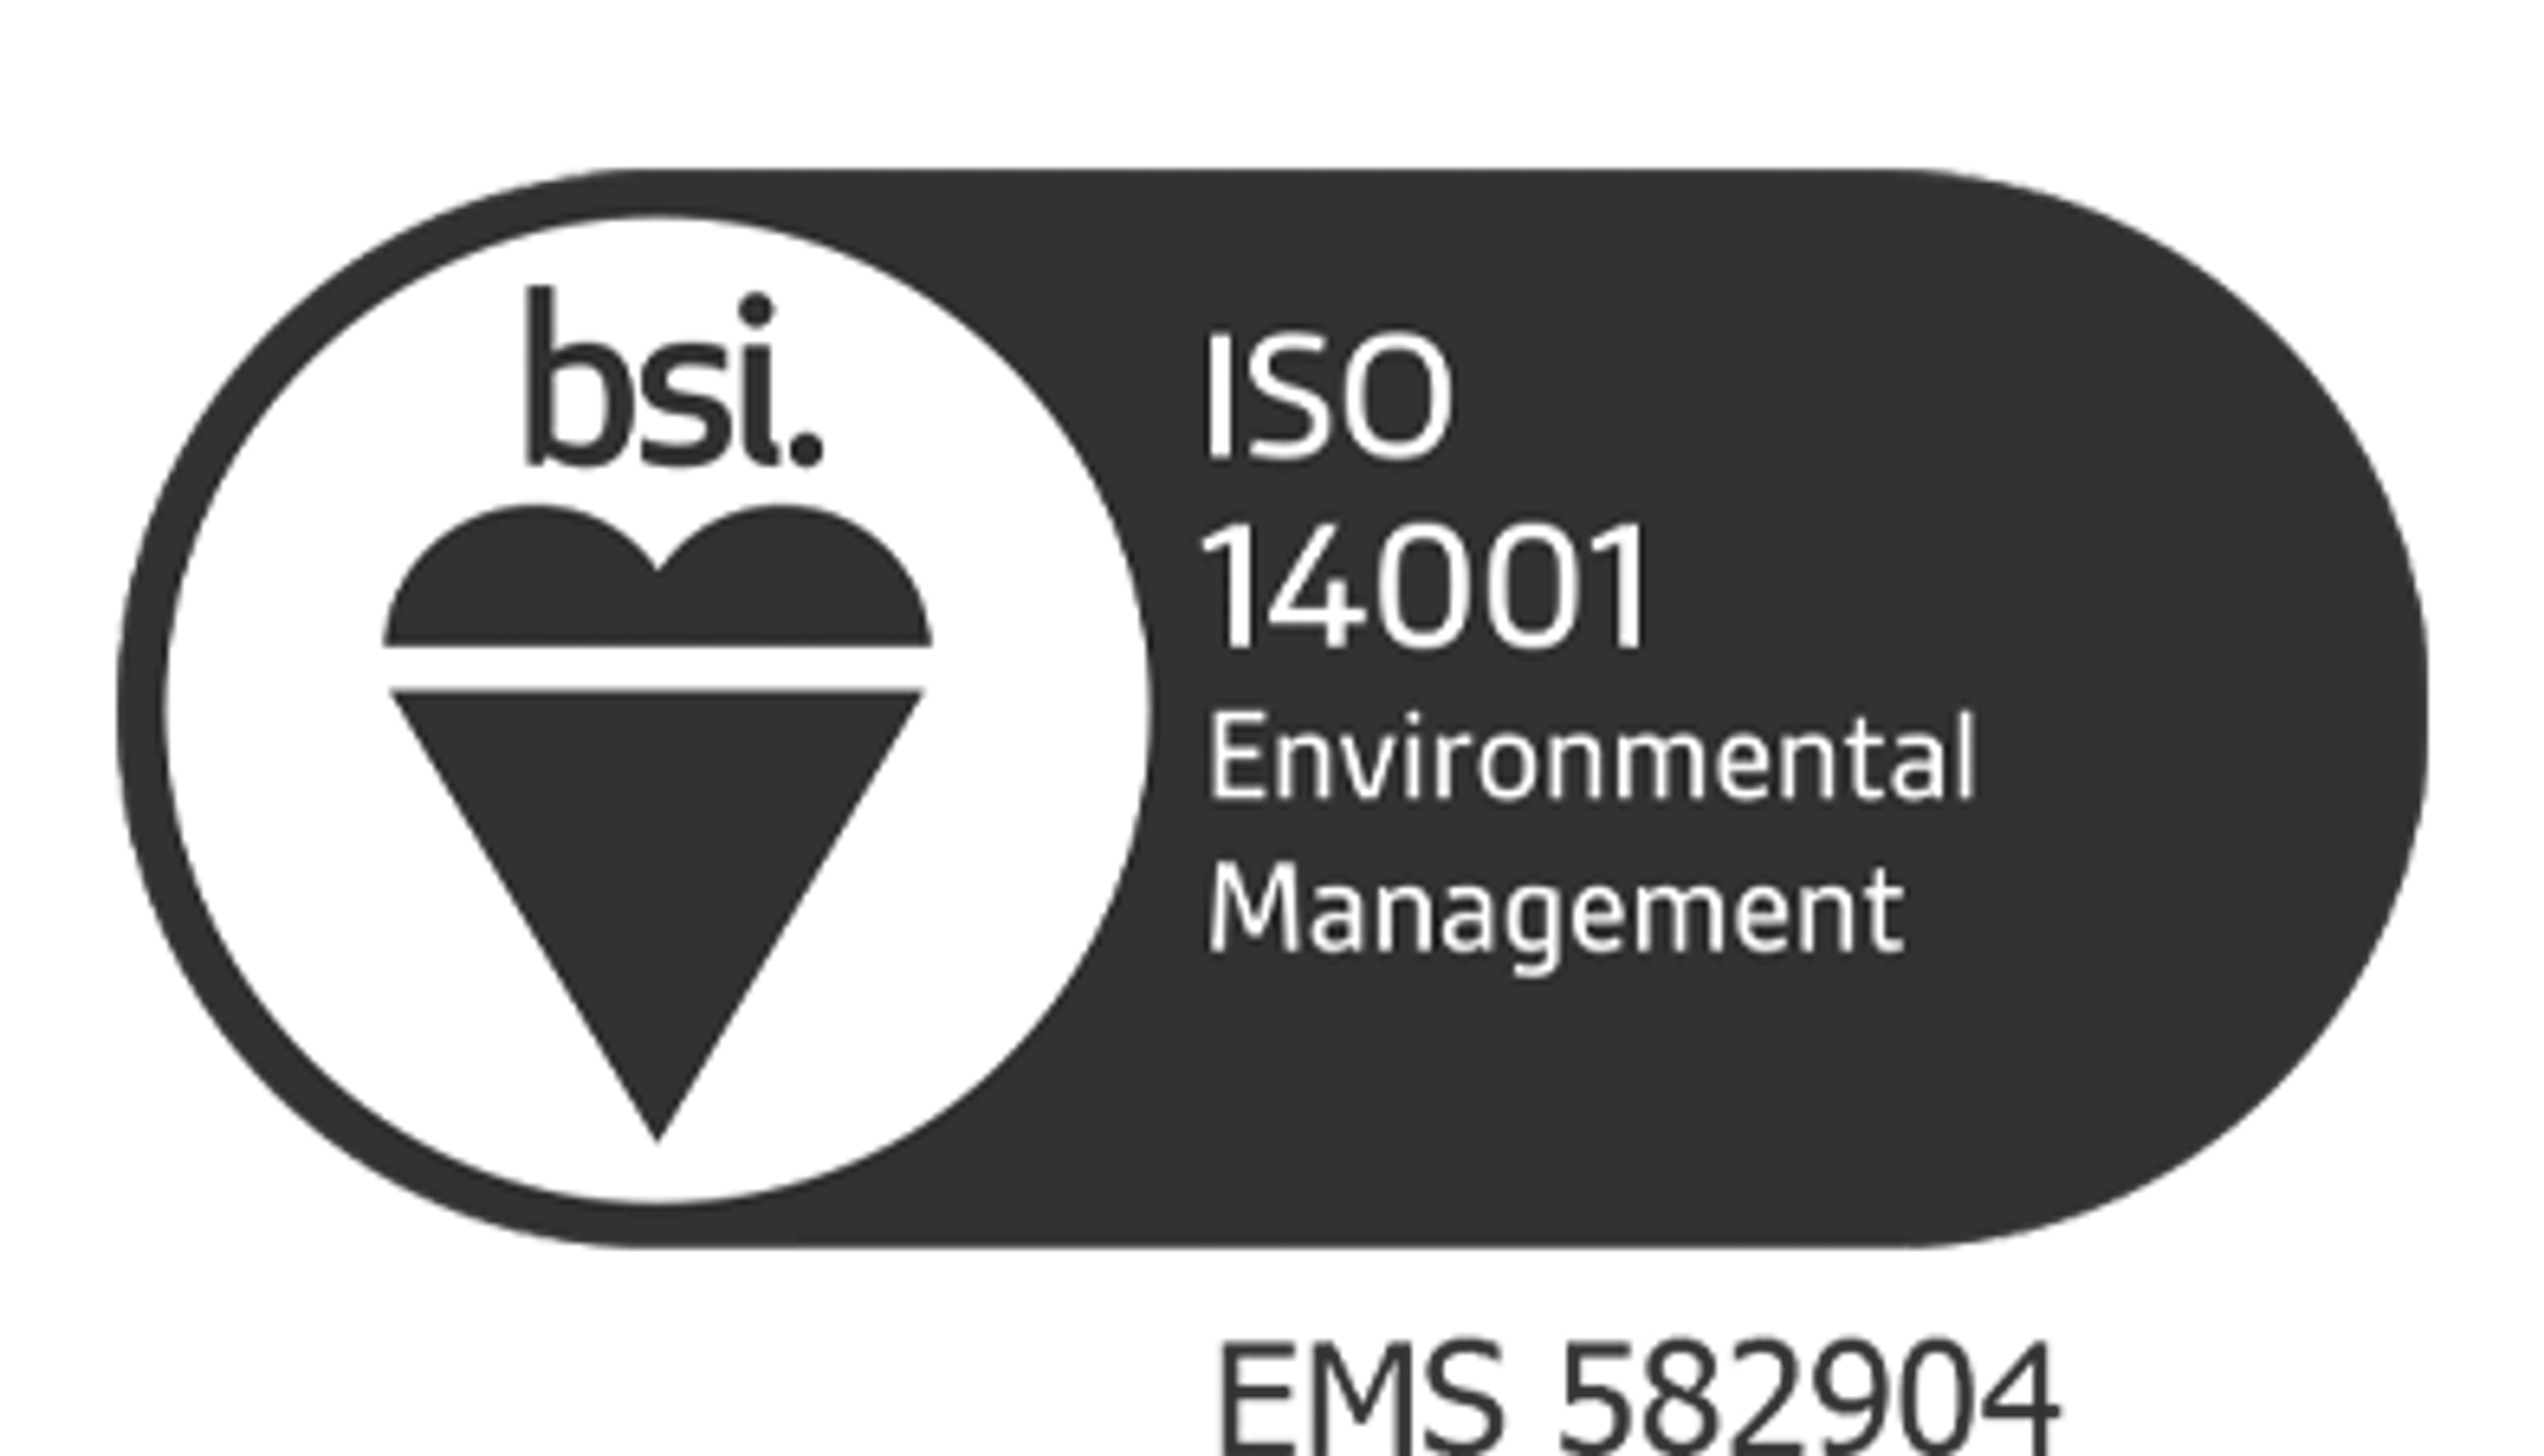 ISO 14001 environmental management